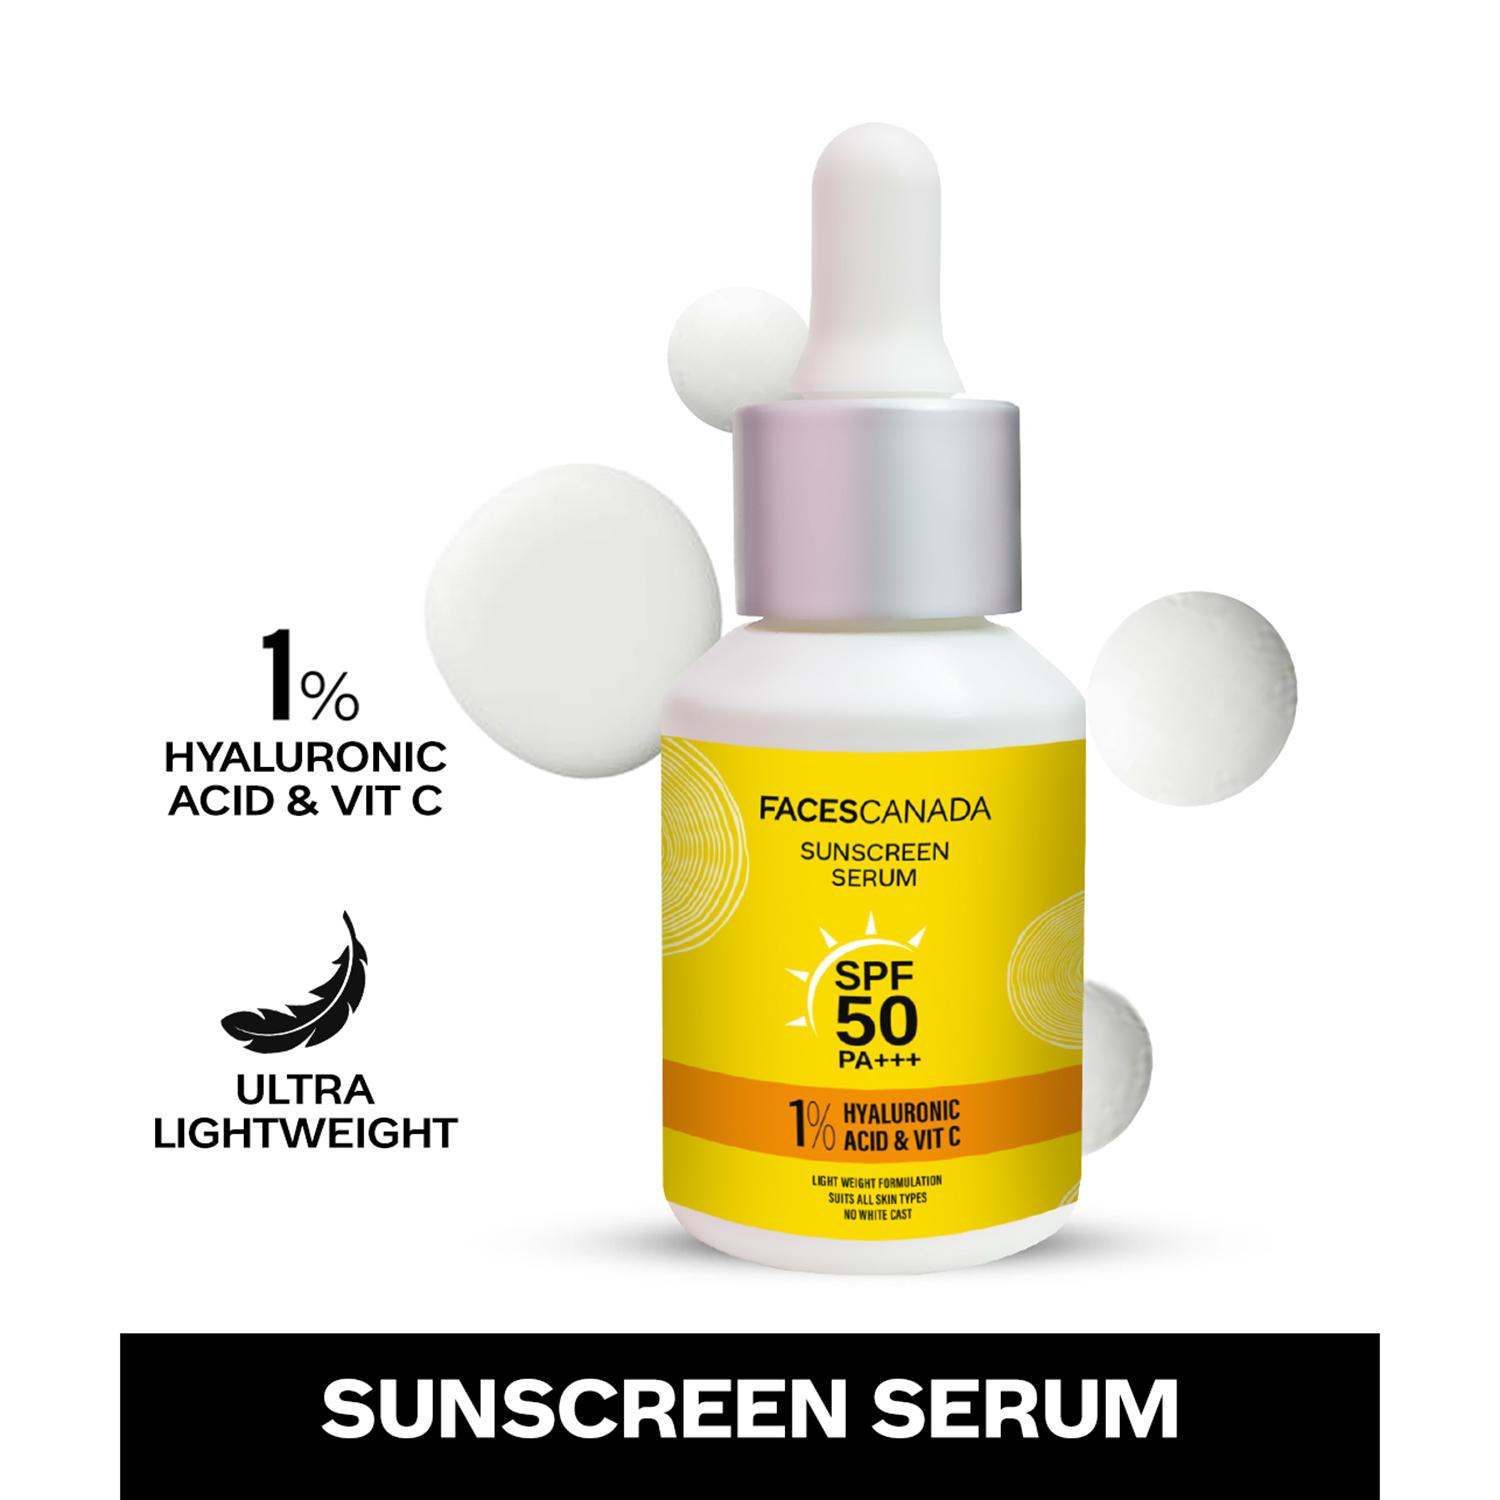 Faces Canada | Faces Canada Sunscreen Serum, SPF 50 PA+++, 1% Hyaluronic Acid & Vitamin C, No White Cast (30 ml)